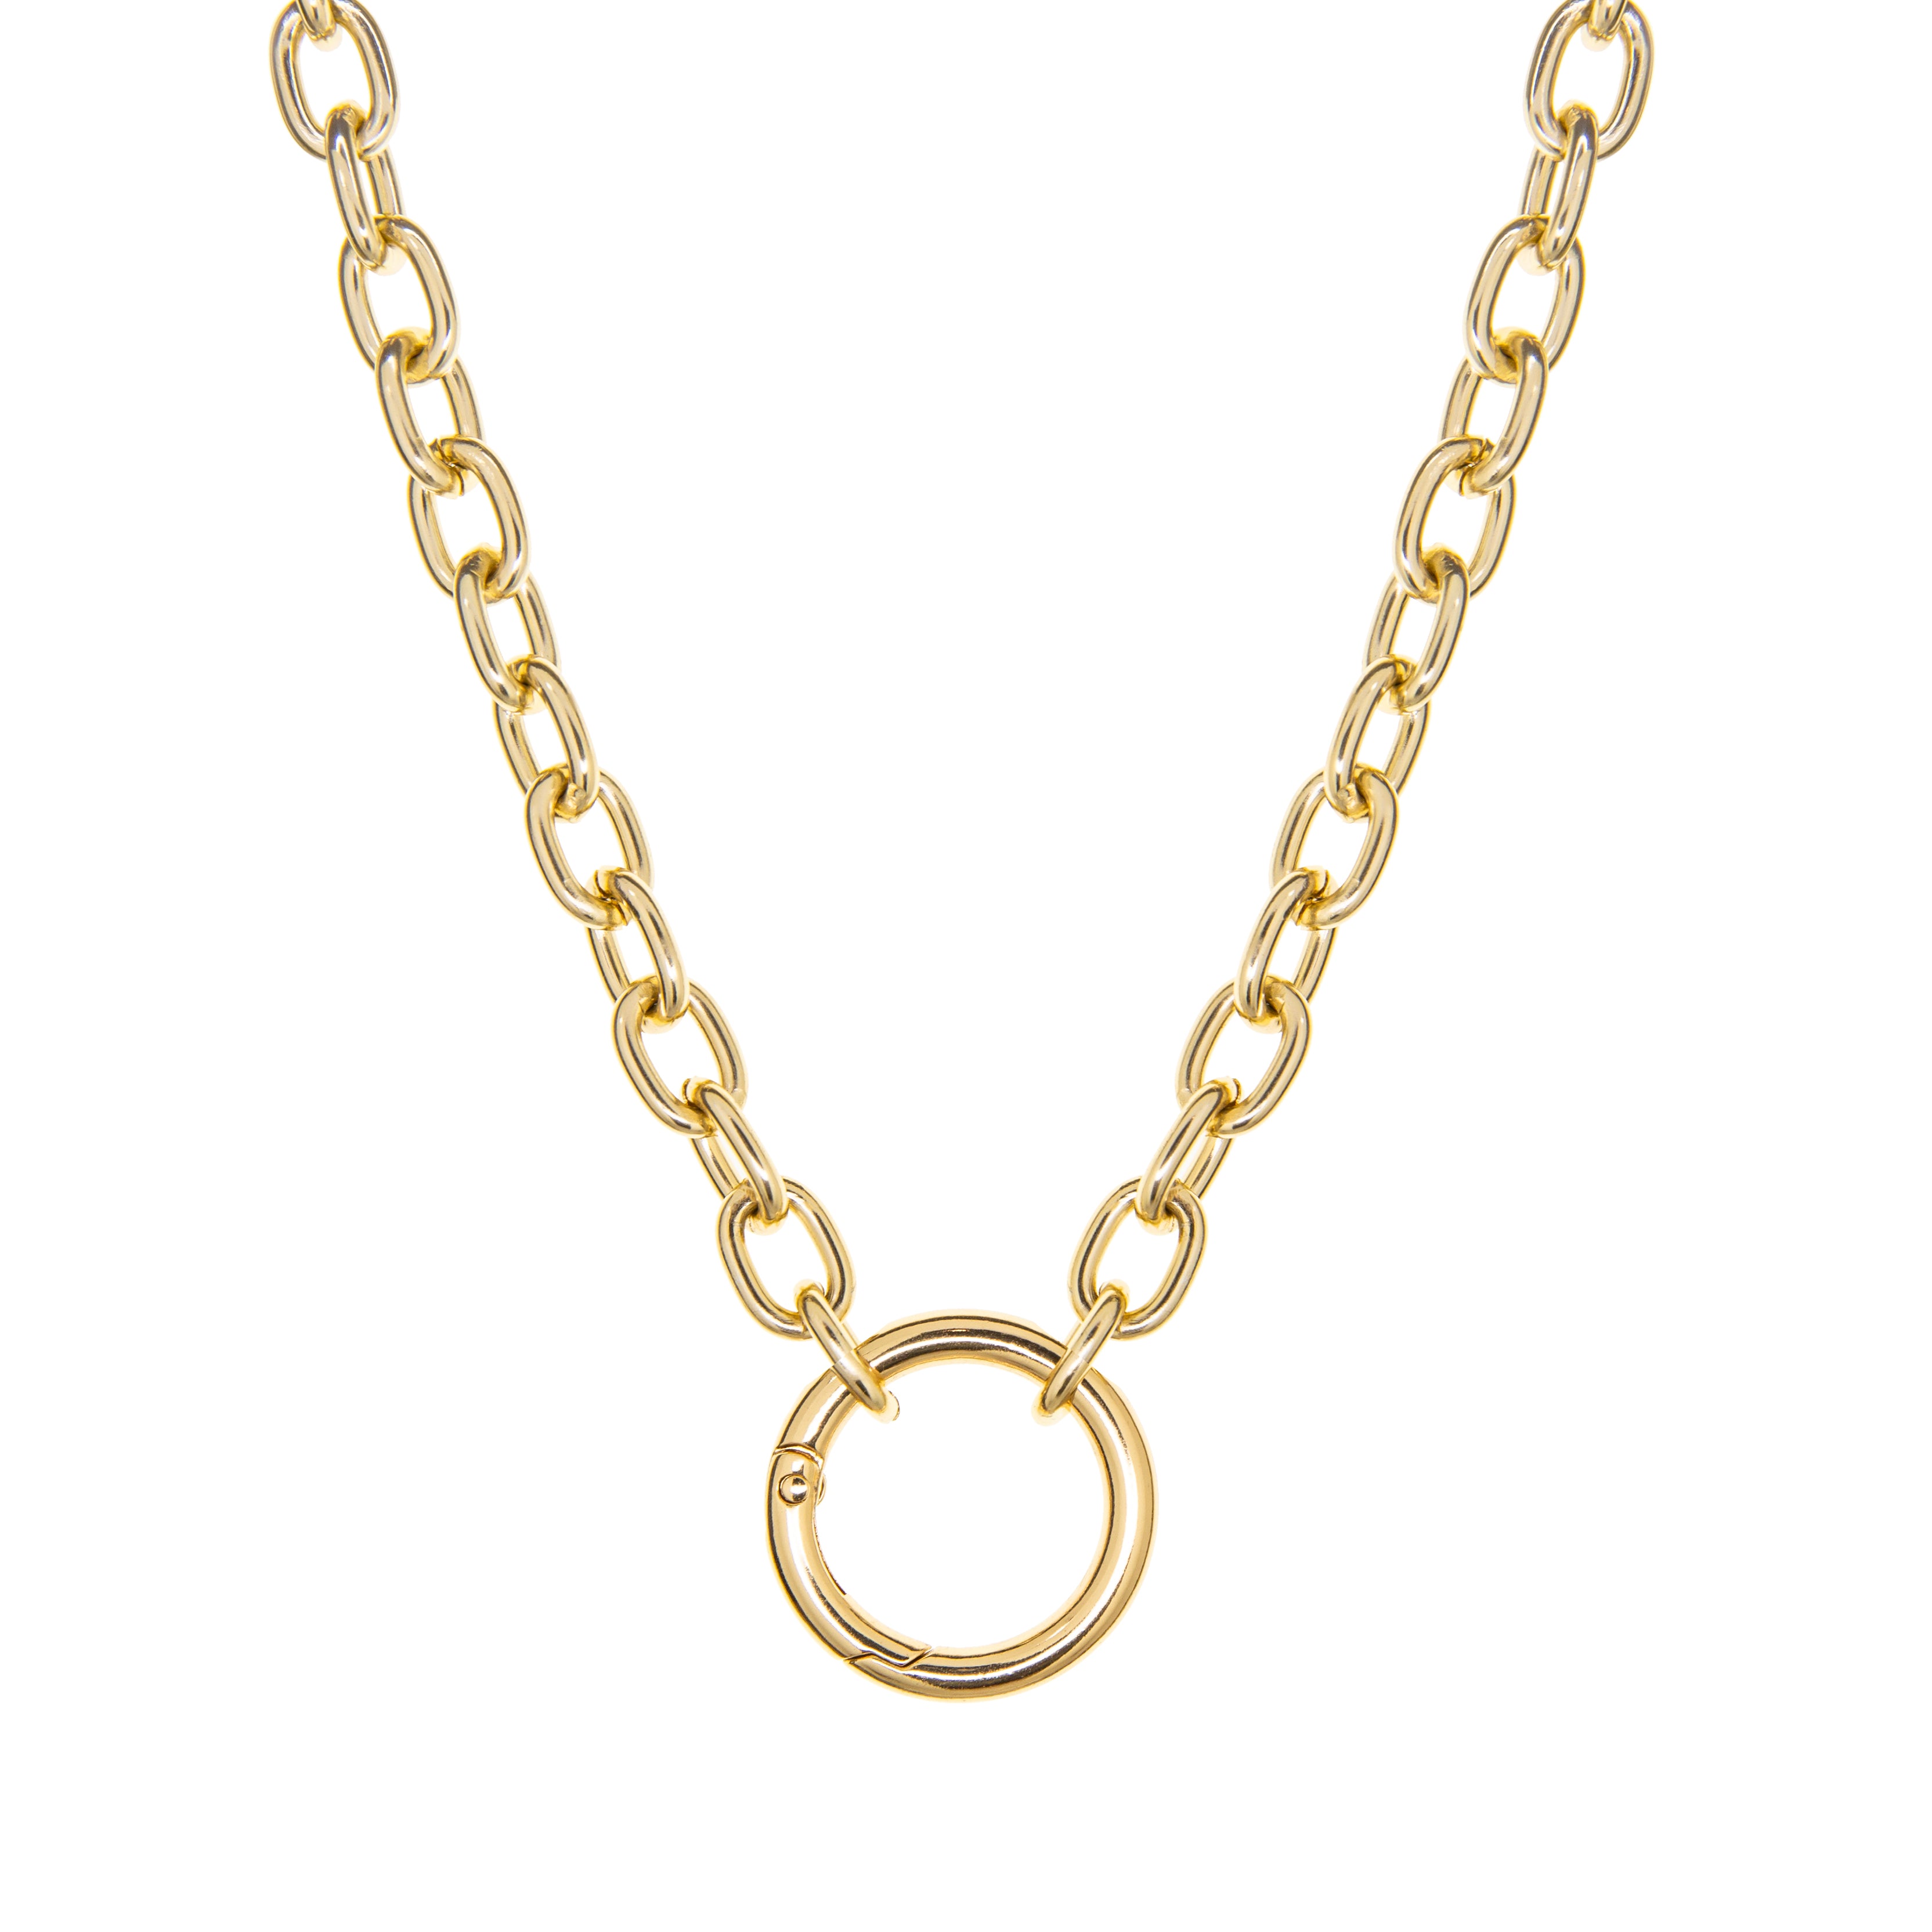 Schiff, Marlyn necklace enamel carabiner LLC – brass